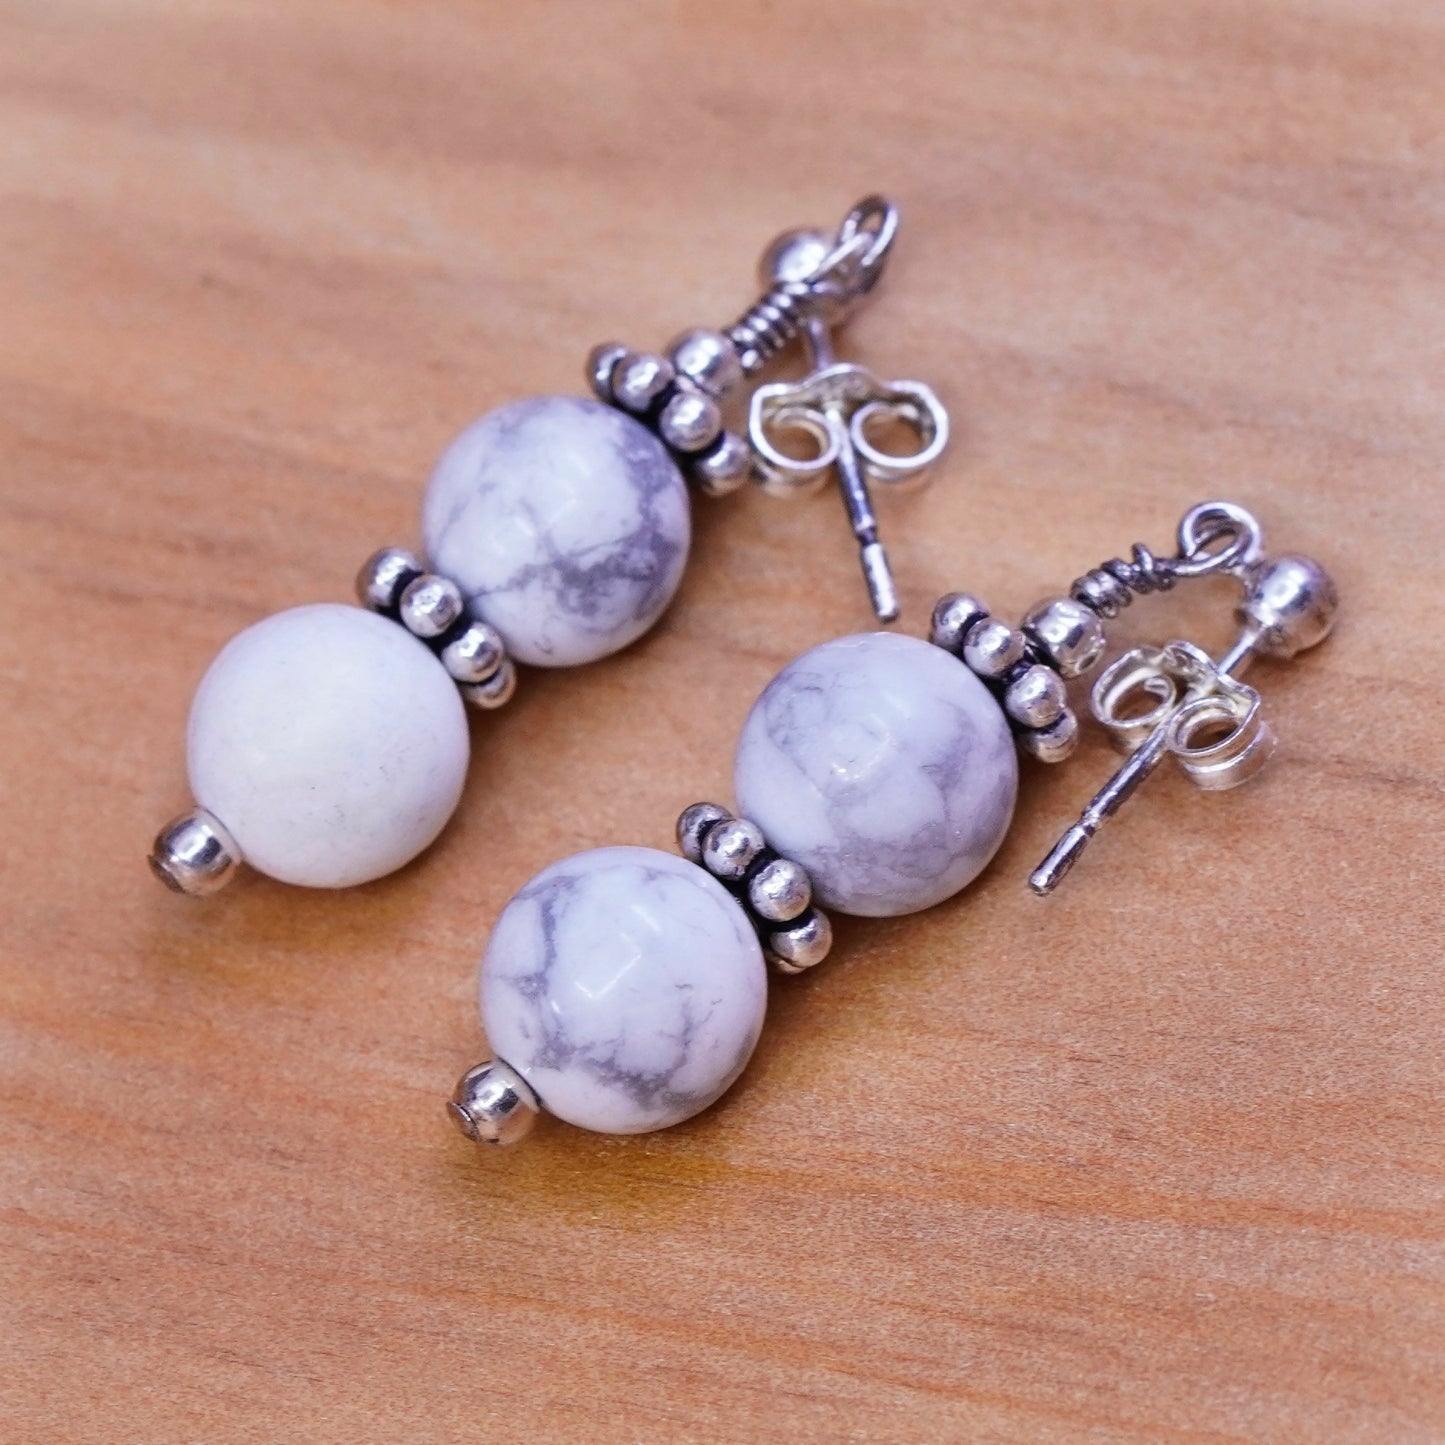 Vintage Sterling 925 silver handmade earrings with howlite beads